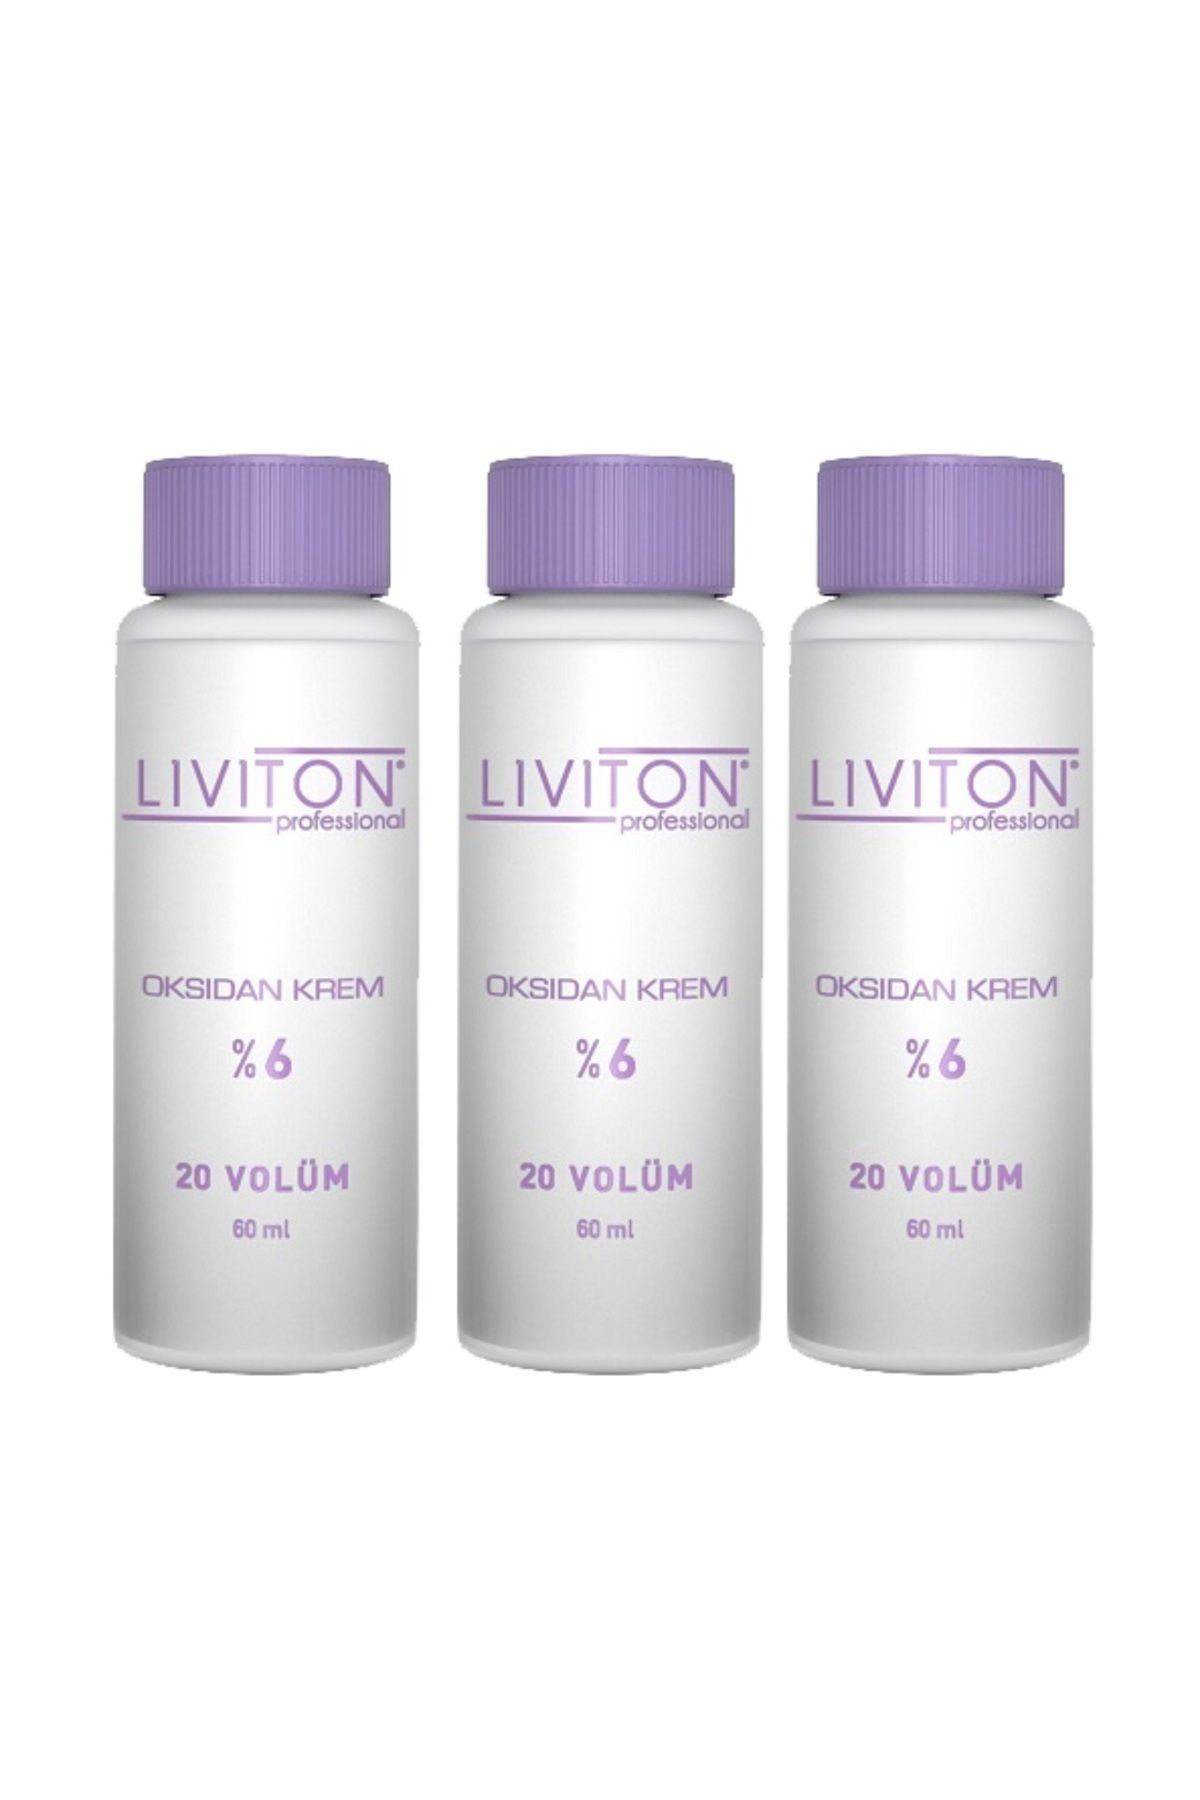 Liviton Professional Mini Oksidan Kremi %6 20 Volume Oksidan 3 Adet